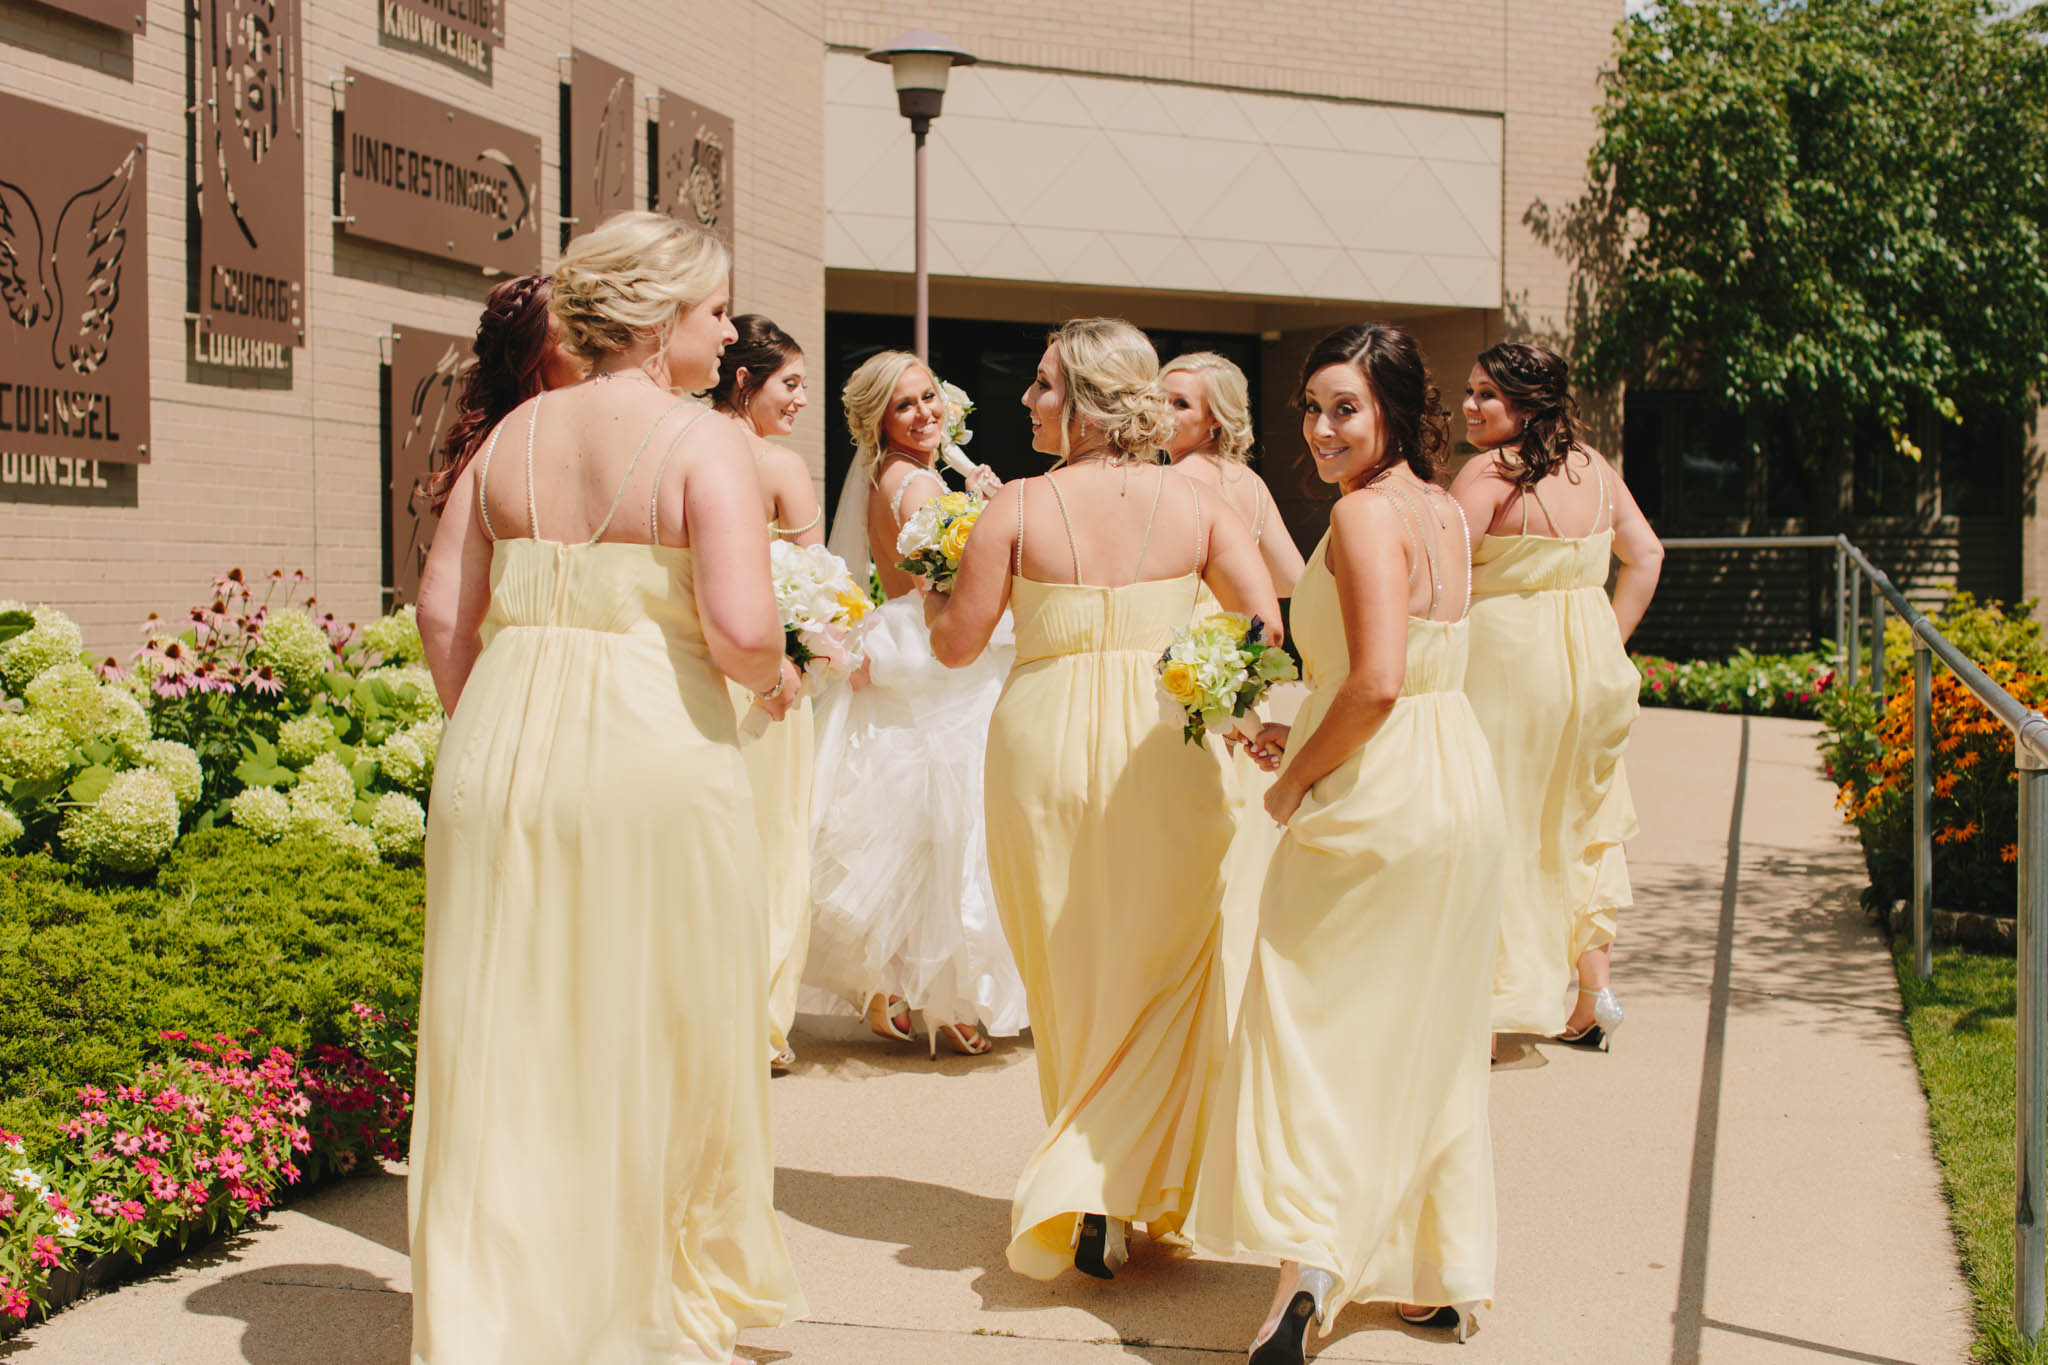 Jillian VanZytveld Photography - Grand Rapids Lifestyle Wedding Photography - 048.jpg